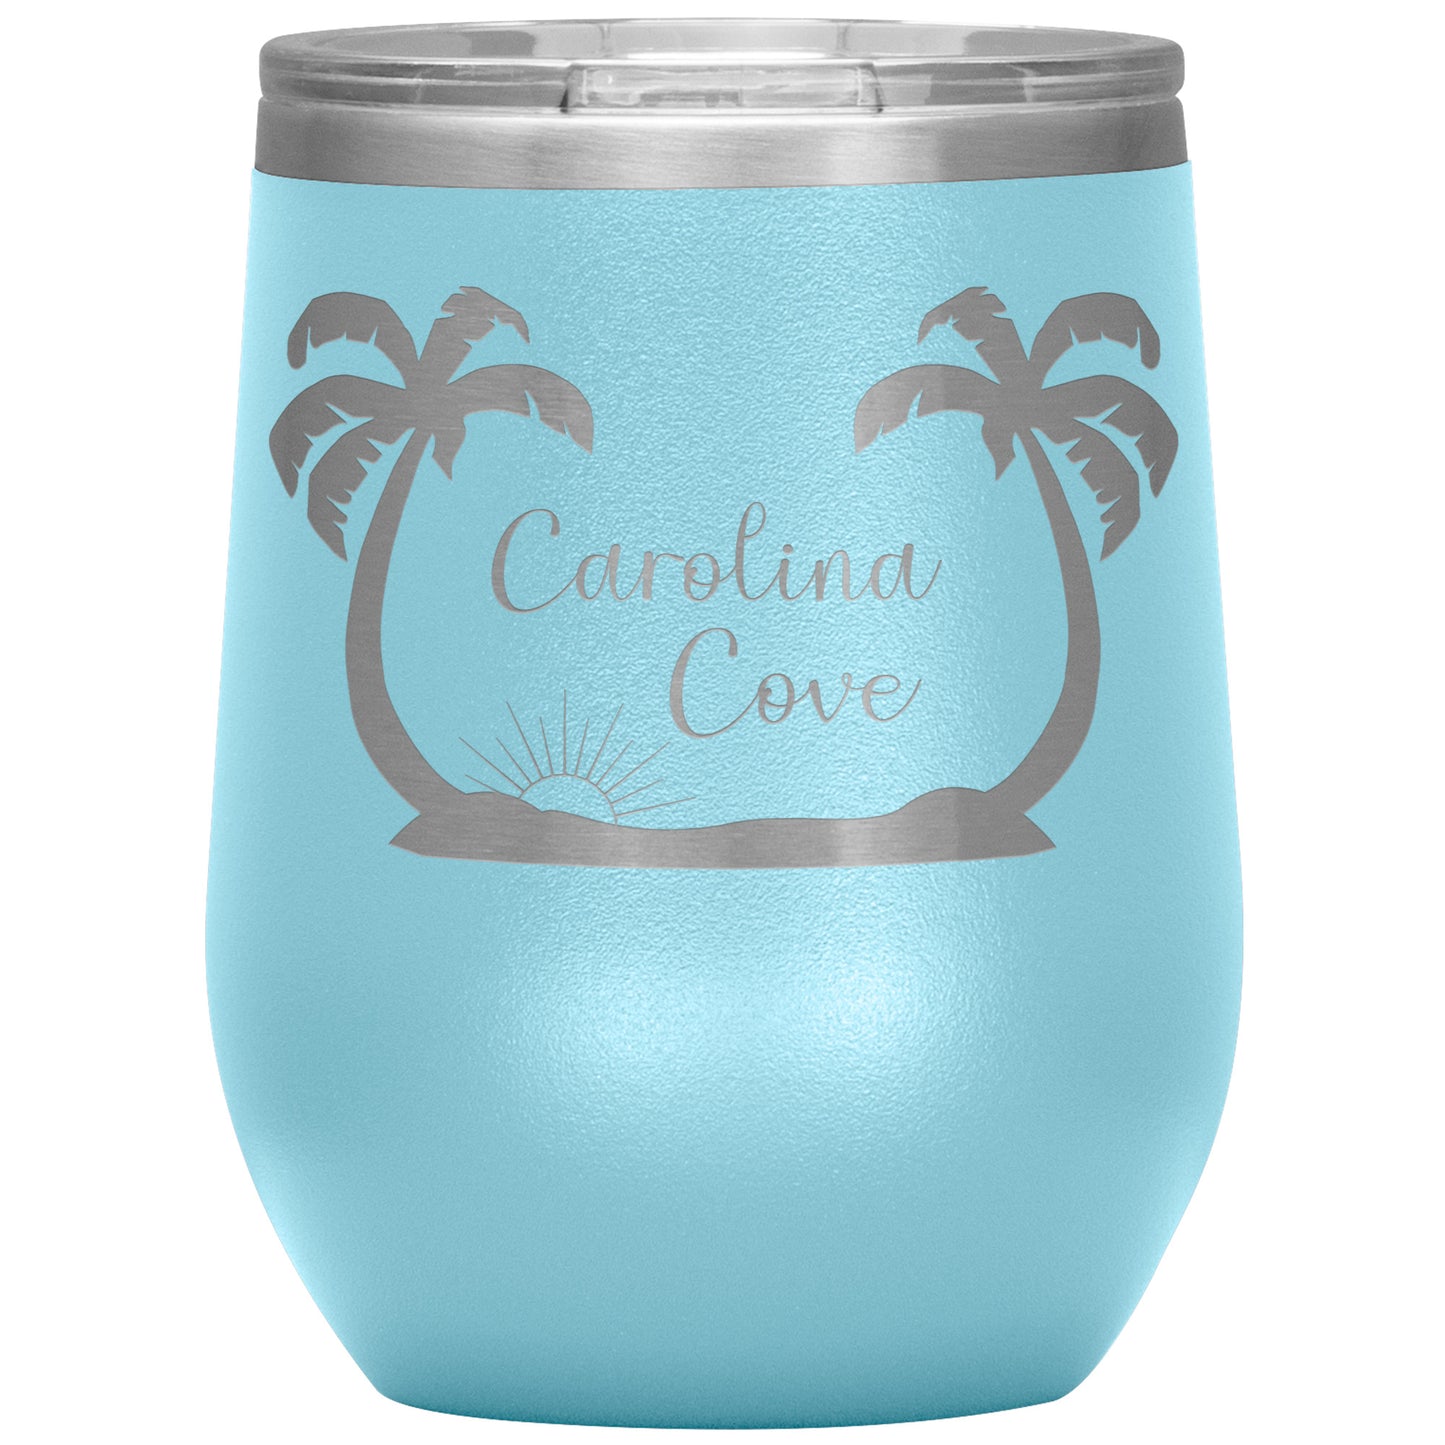 Carolina Cove - 12oz Wine Tumbler